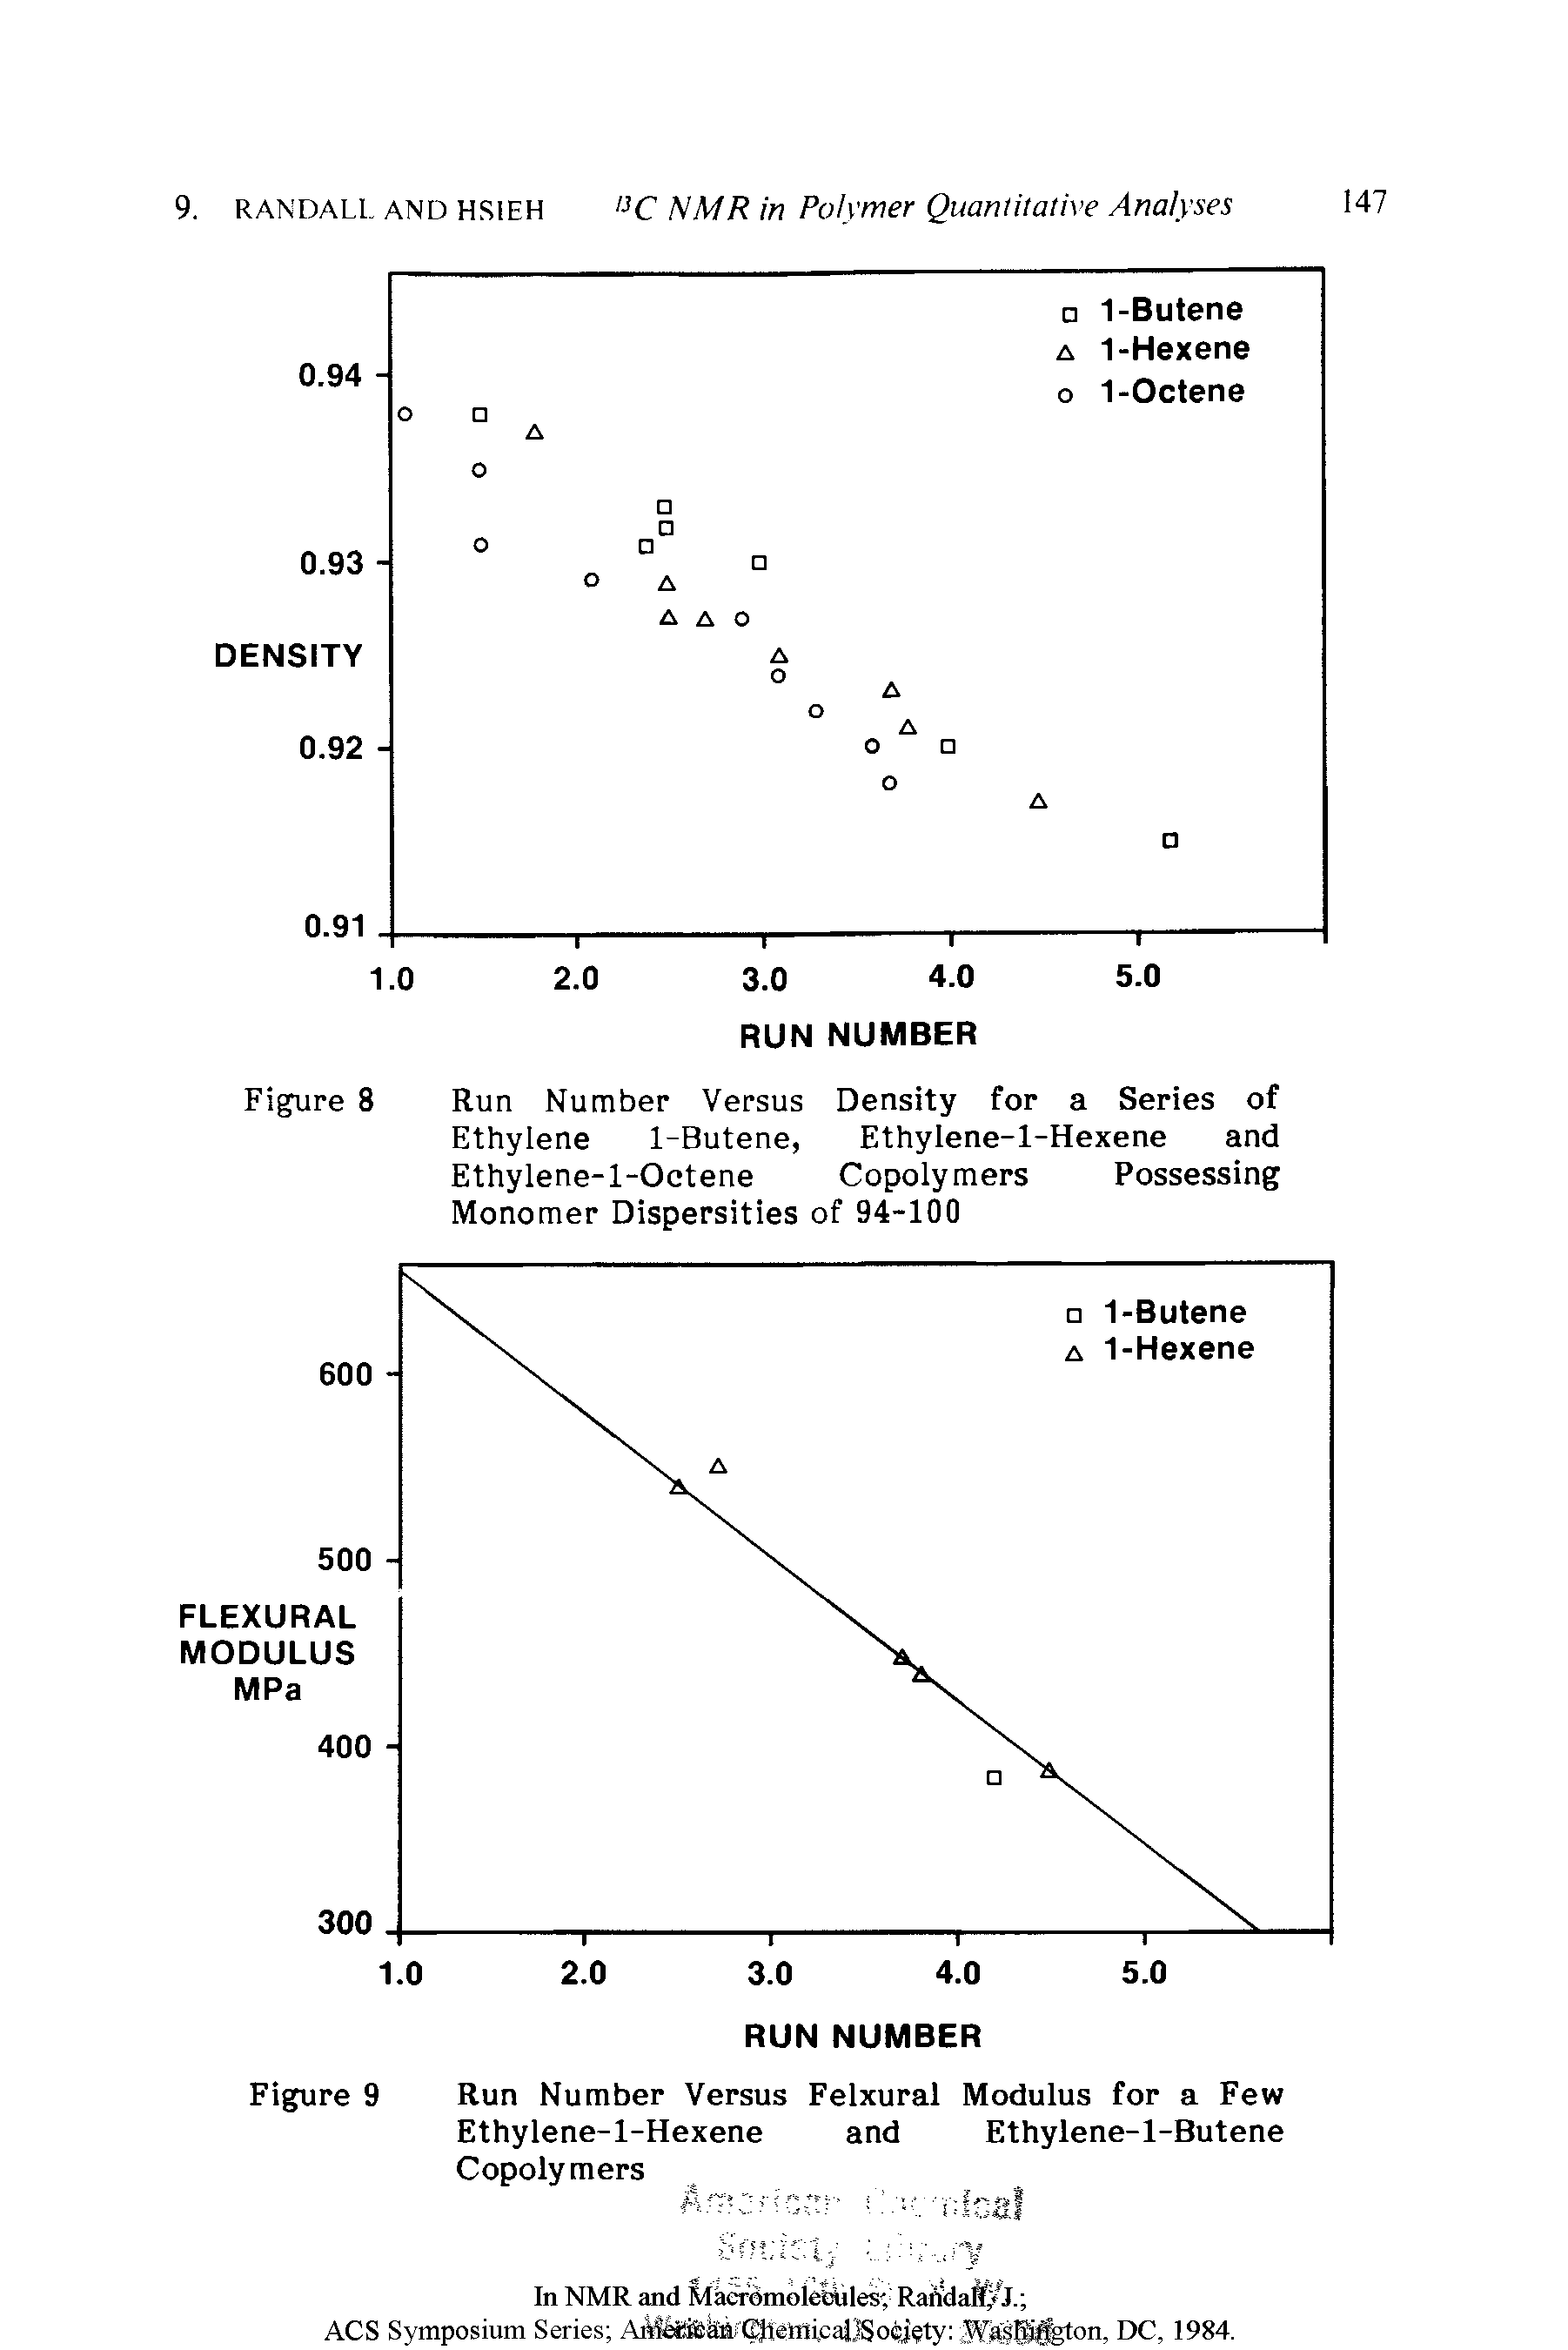 Figure 9 Run Number Versus Felxural Modulus for a Few Ethylene-l-Hexene and Ethylene-l-Butene Copolymers...